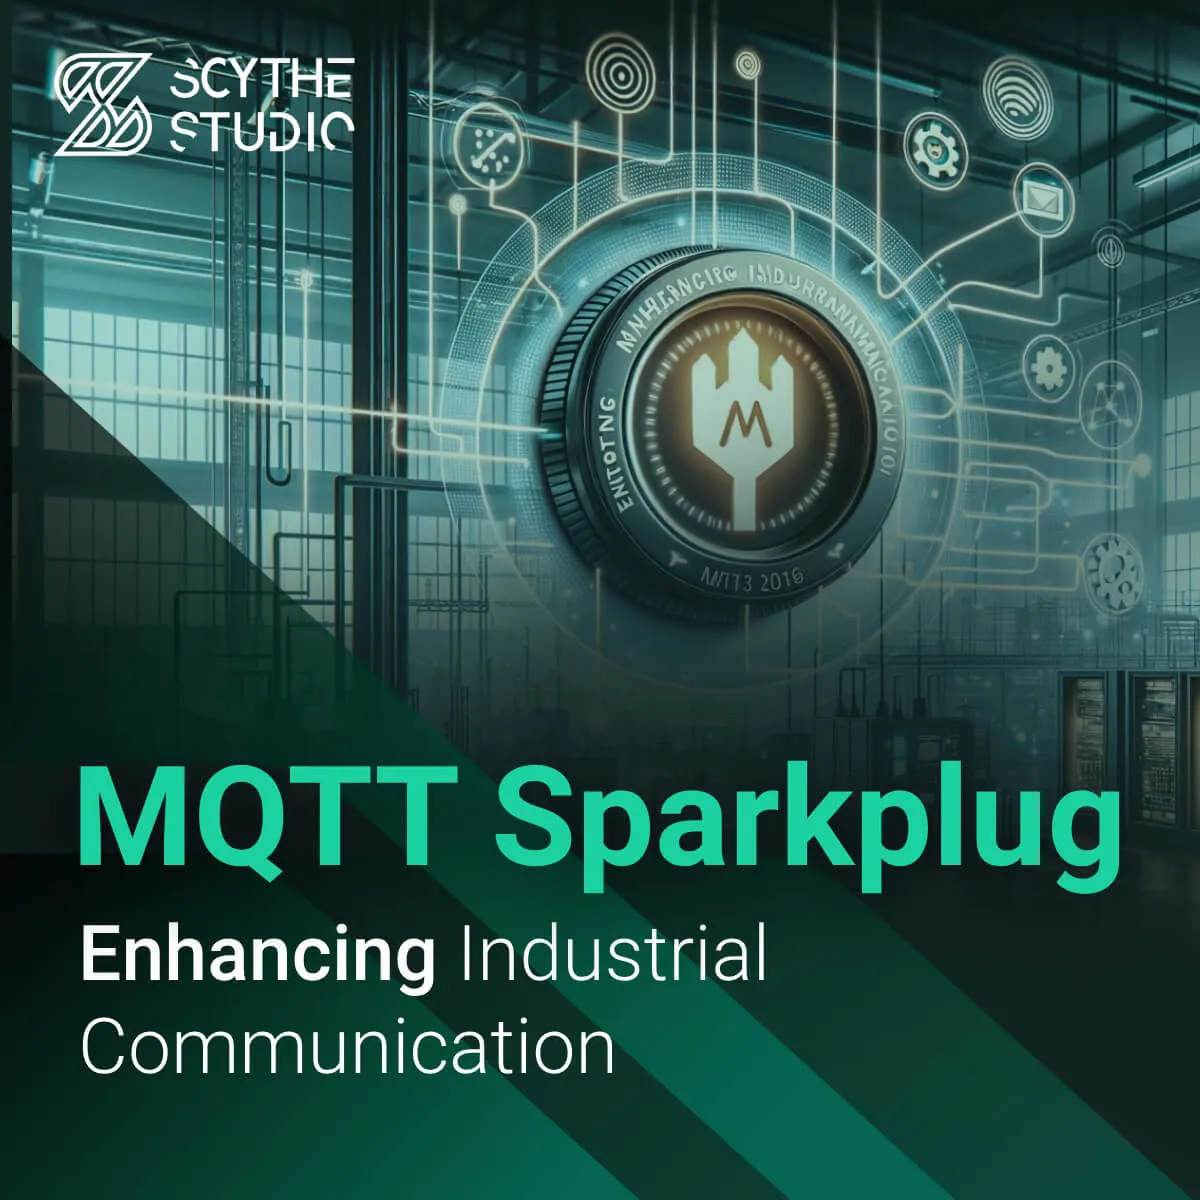 MQTT Sparkplug: Enhancing Industrial Communication